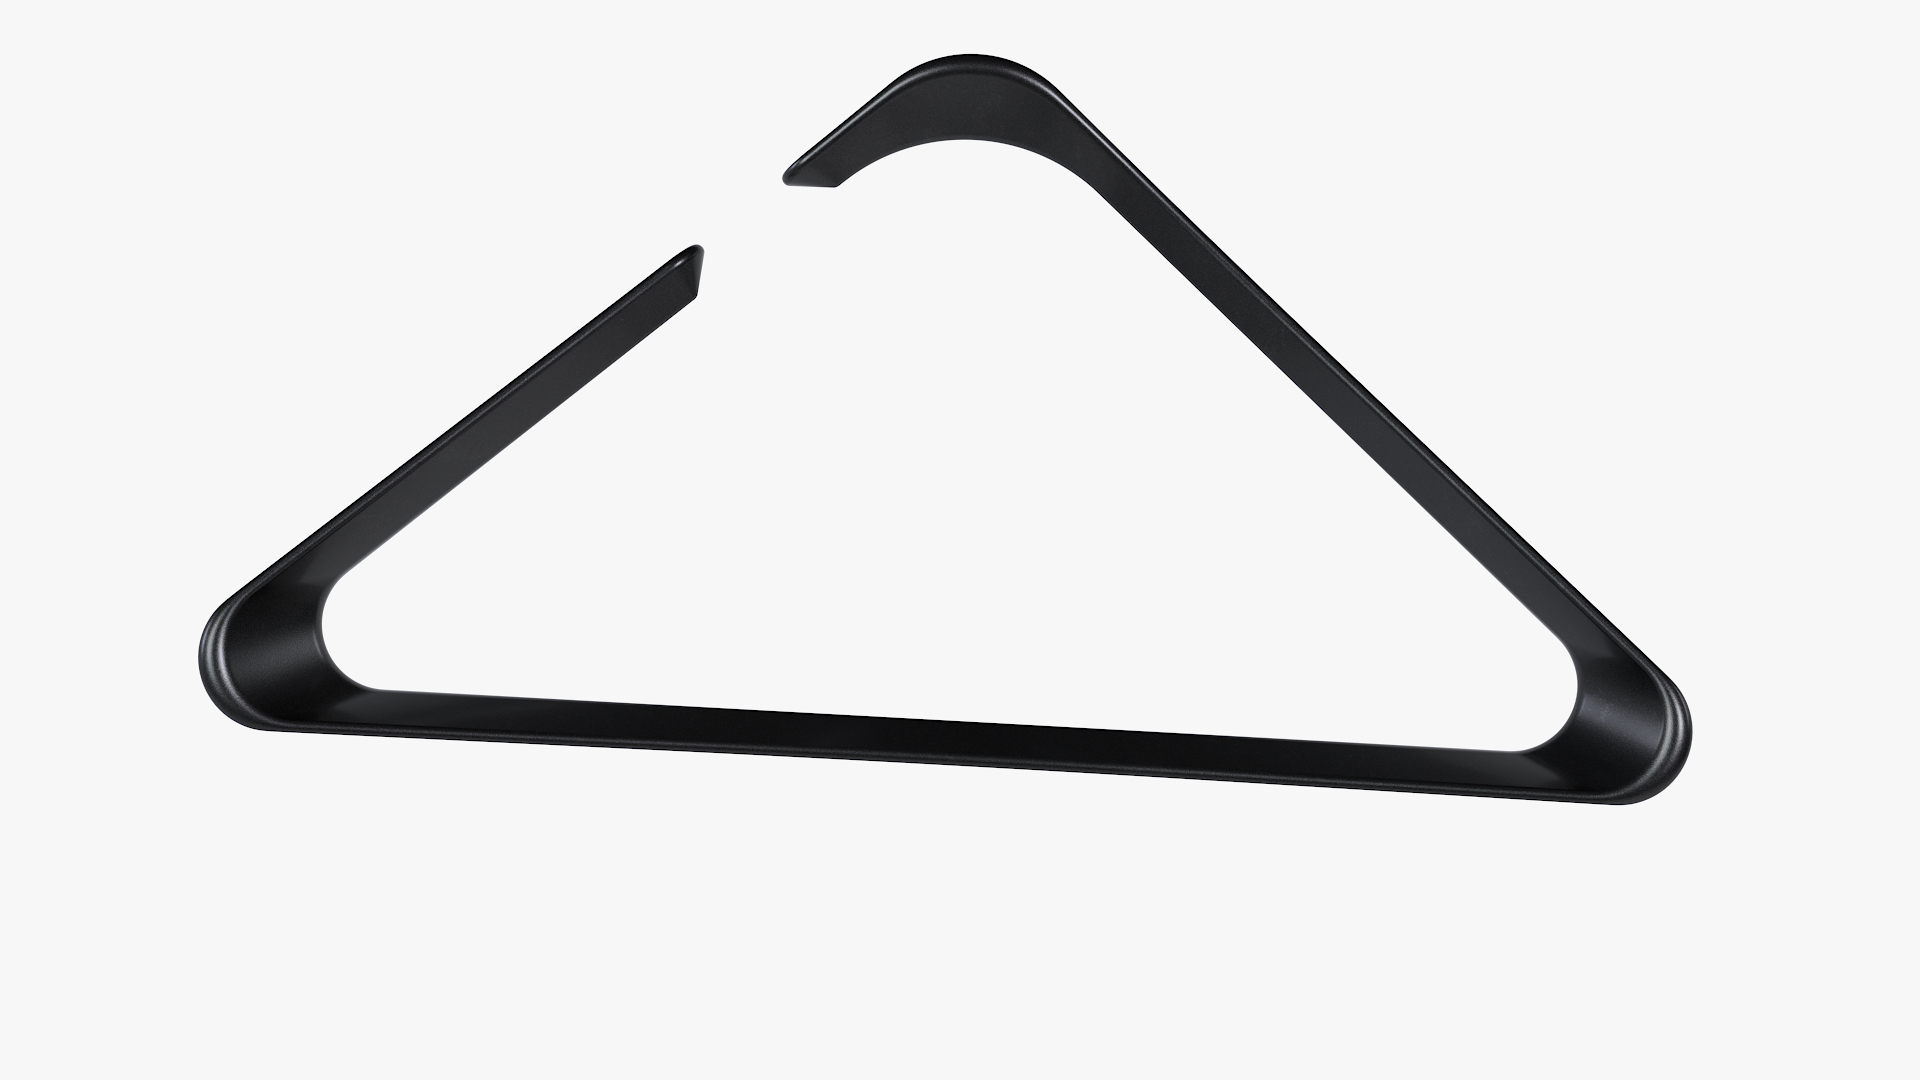 The Roomsafari Triangle Hanger